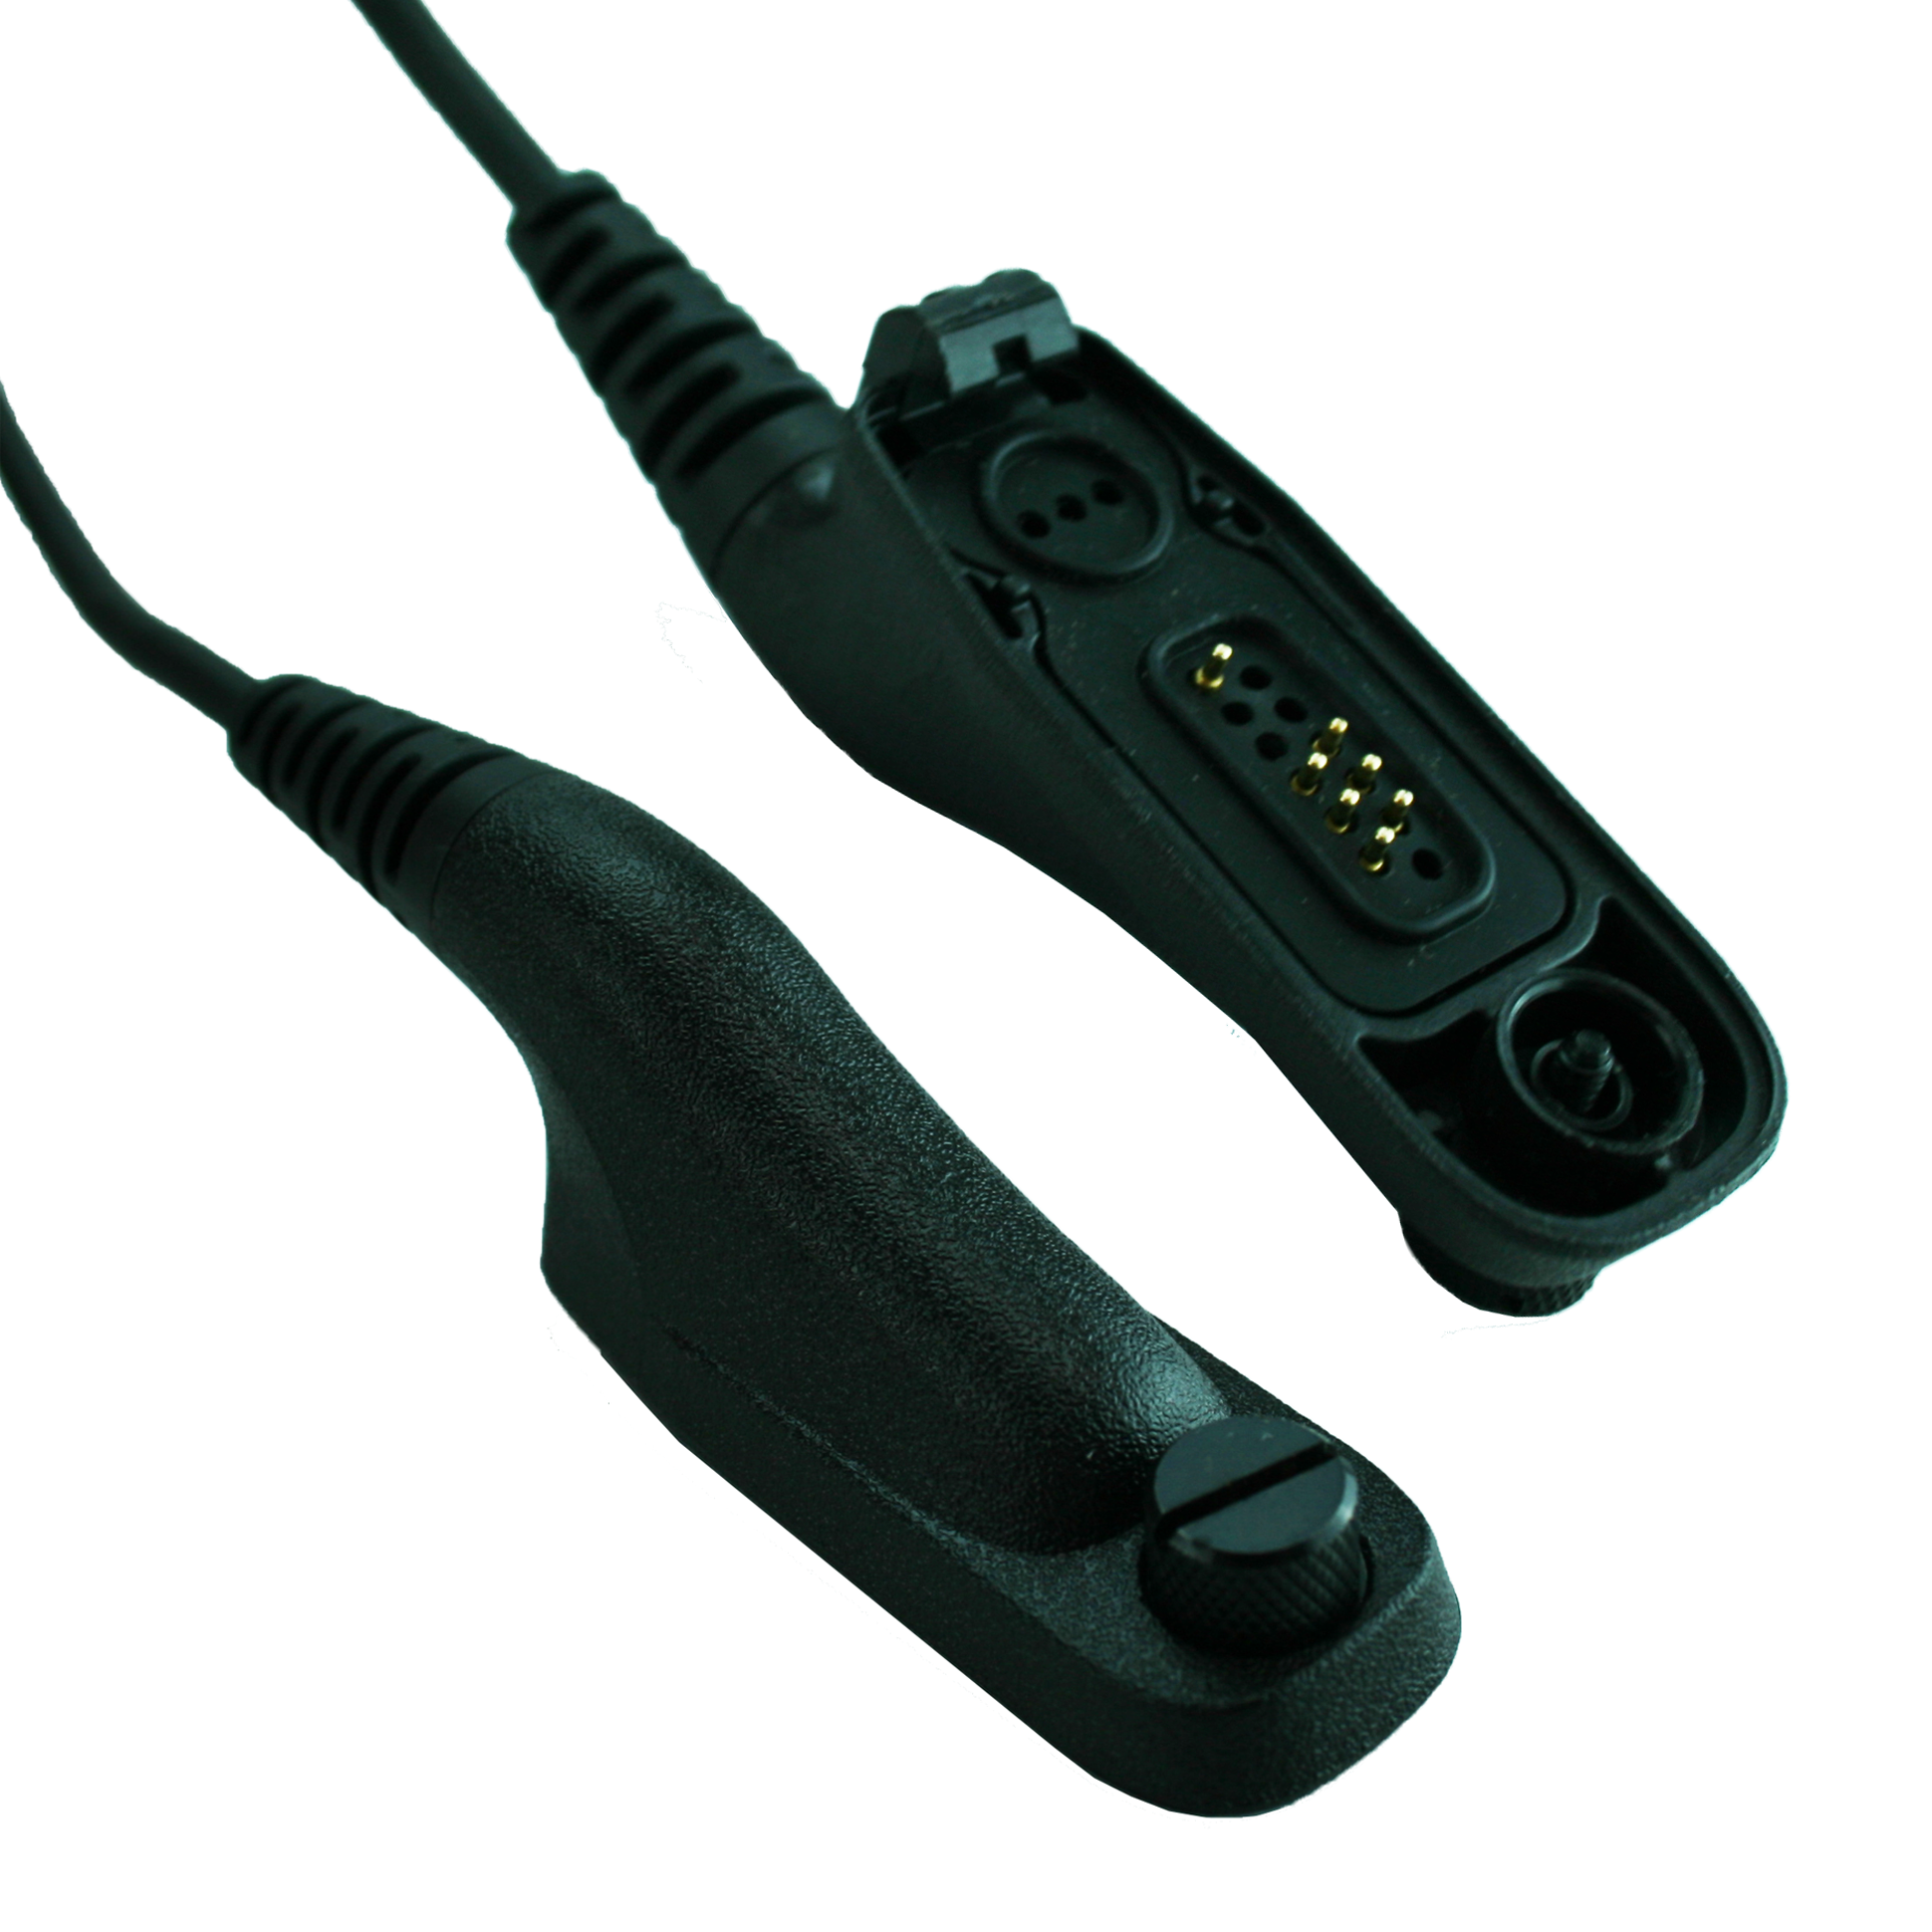 Speaker Mic PMMN4024A for Motorola XPR6550 PMMN4025 XPR7550 XPR7550e Tested